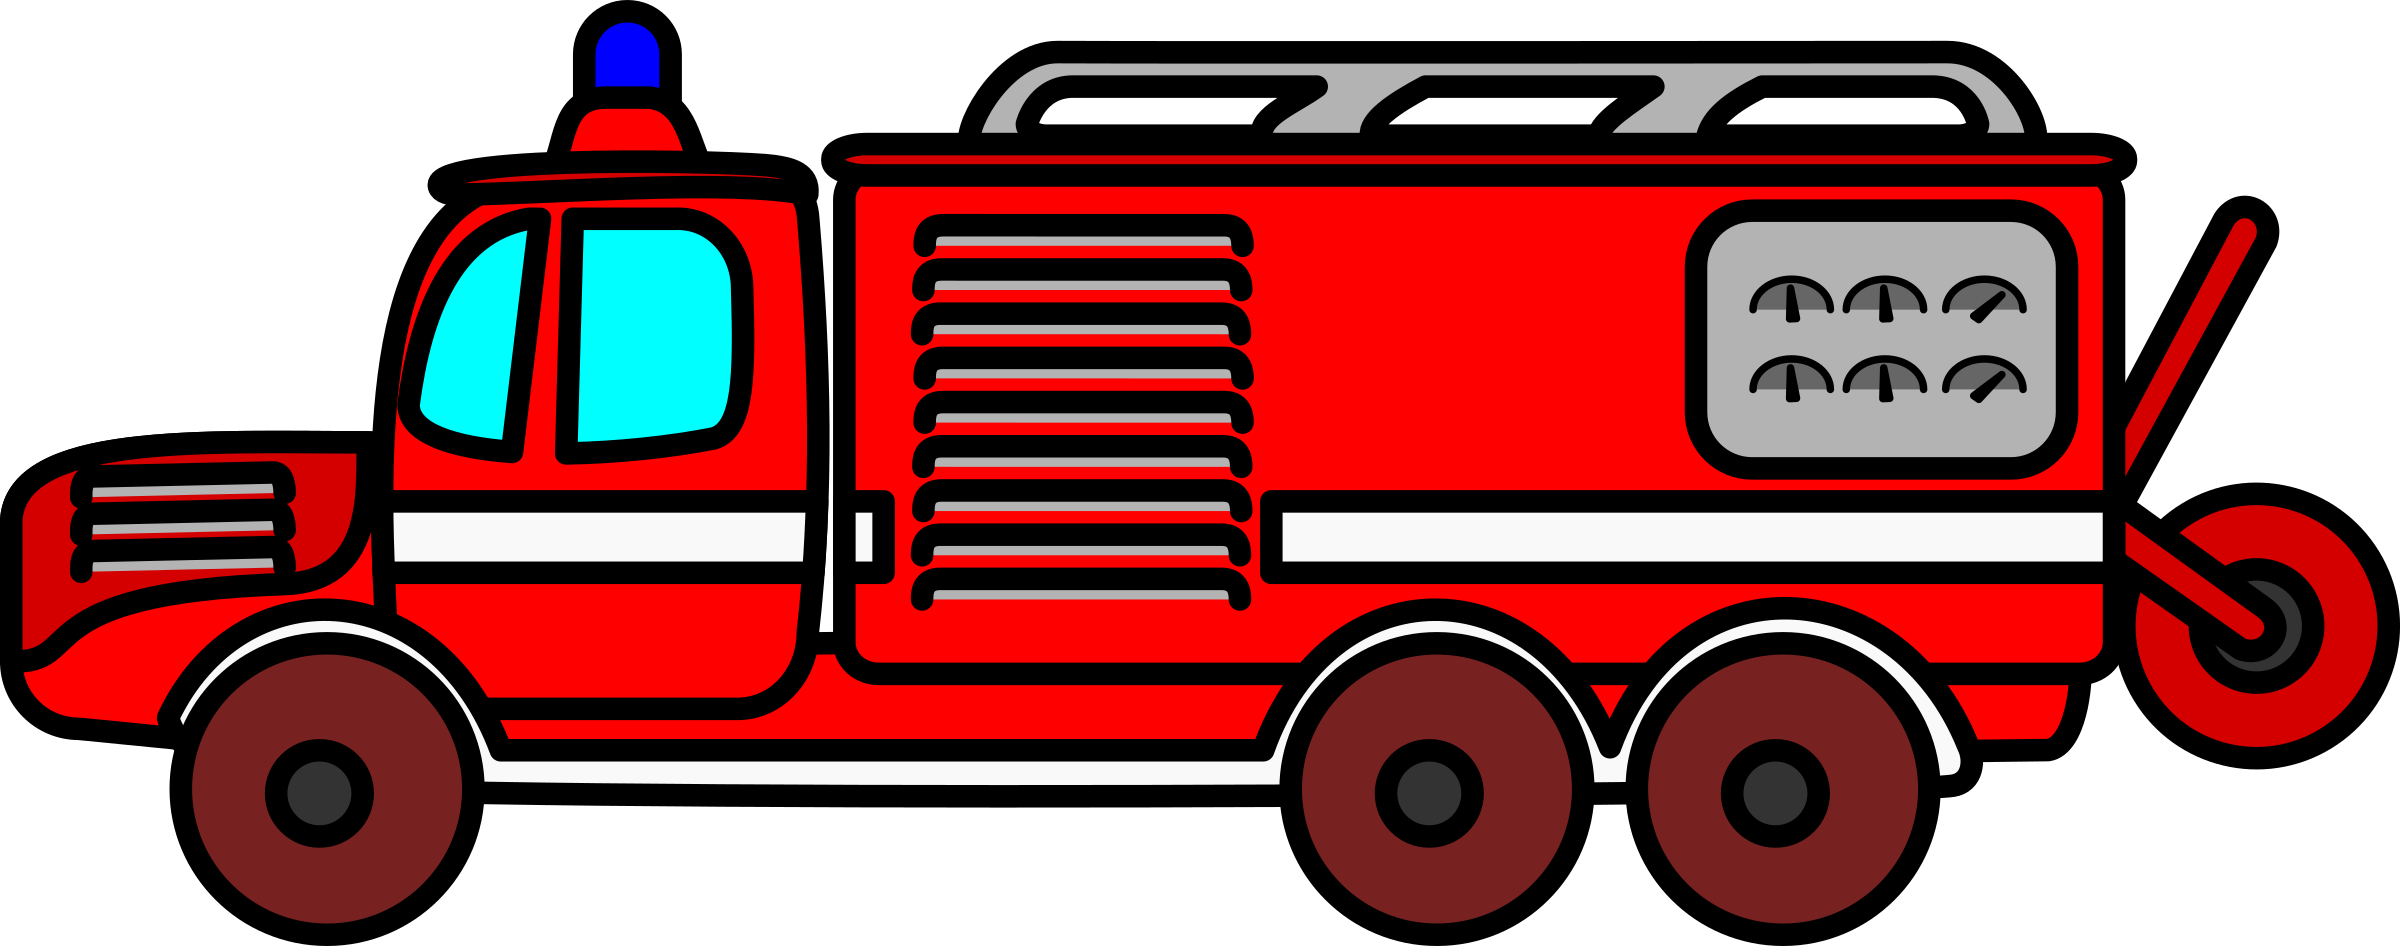 Big Image - Fire Engine (2400x946)